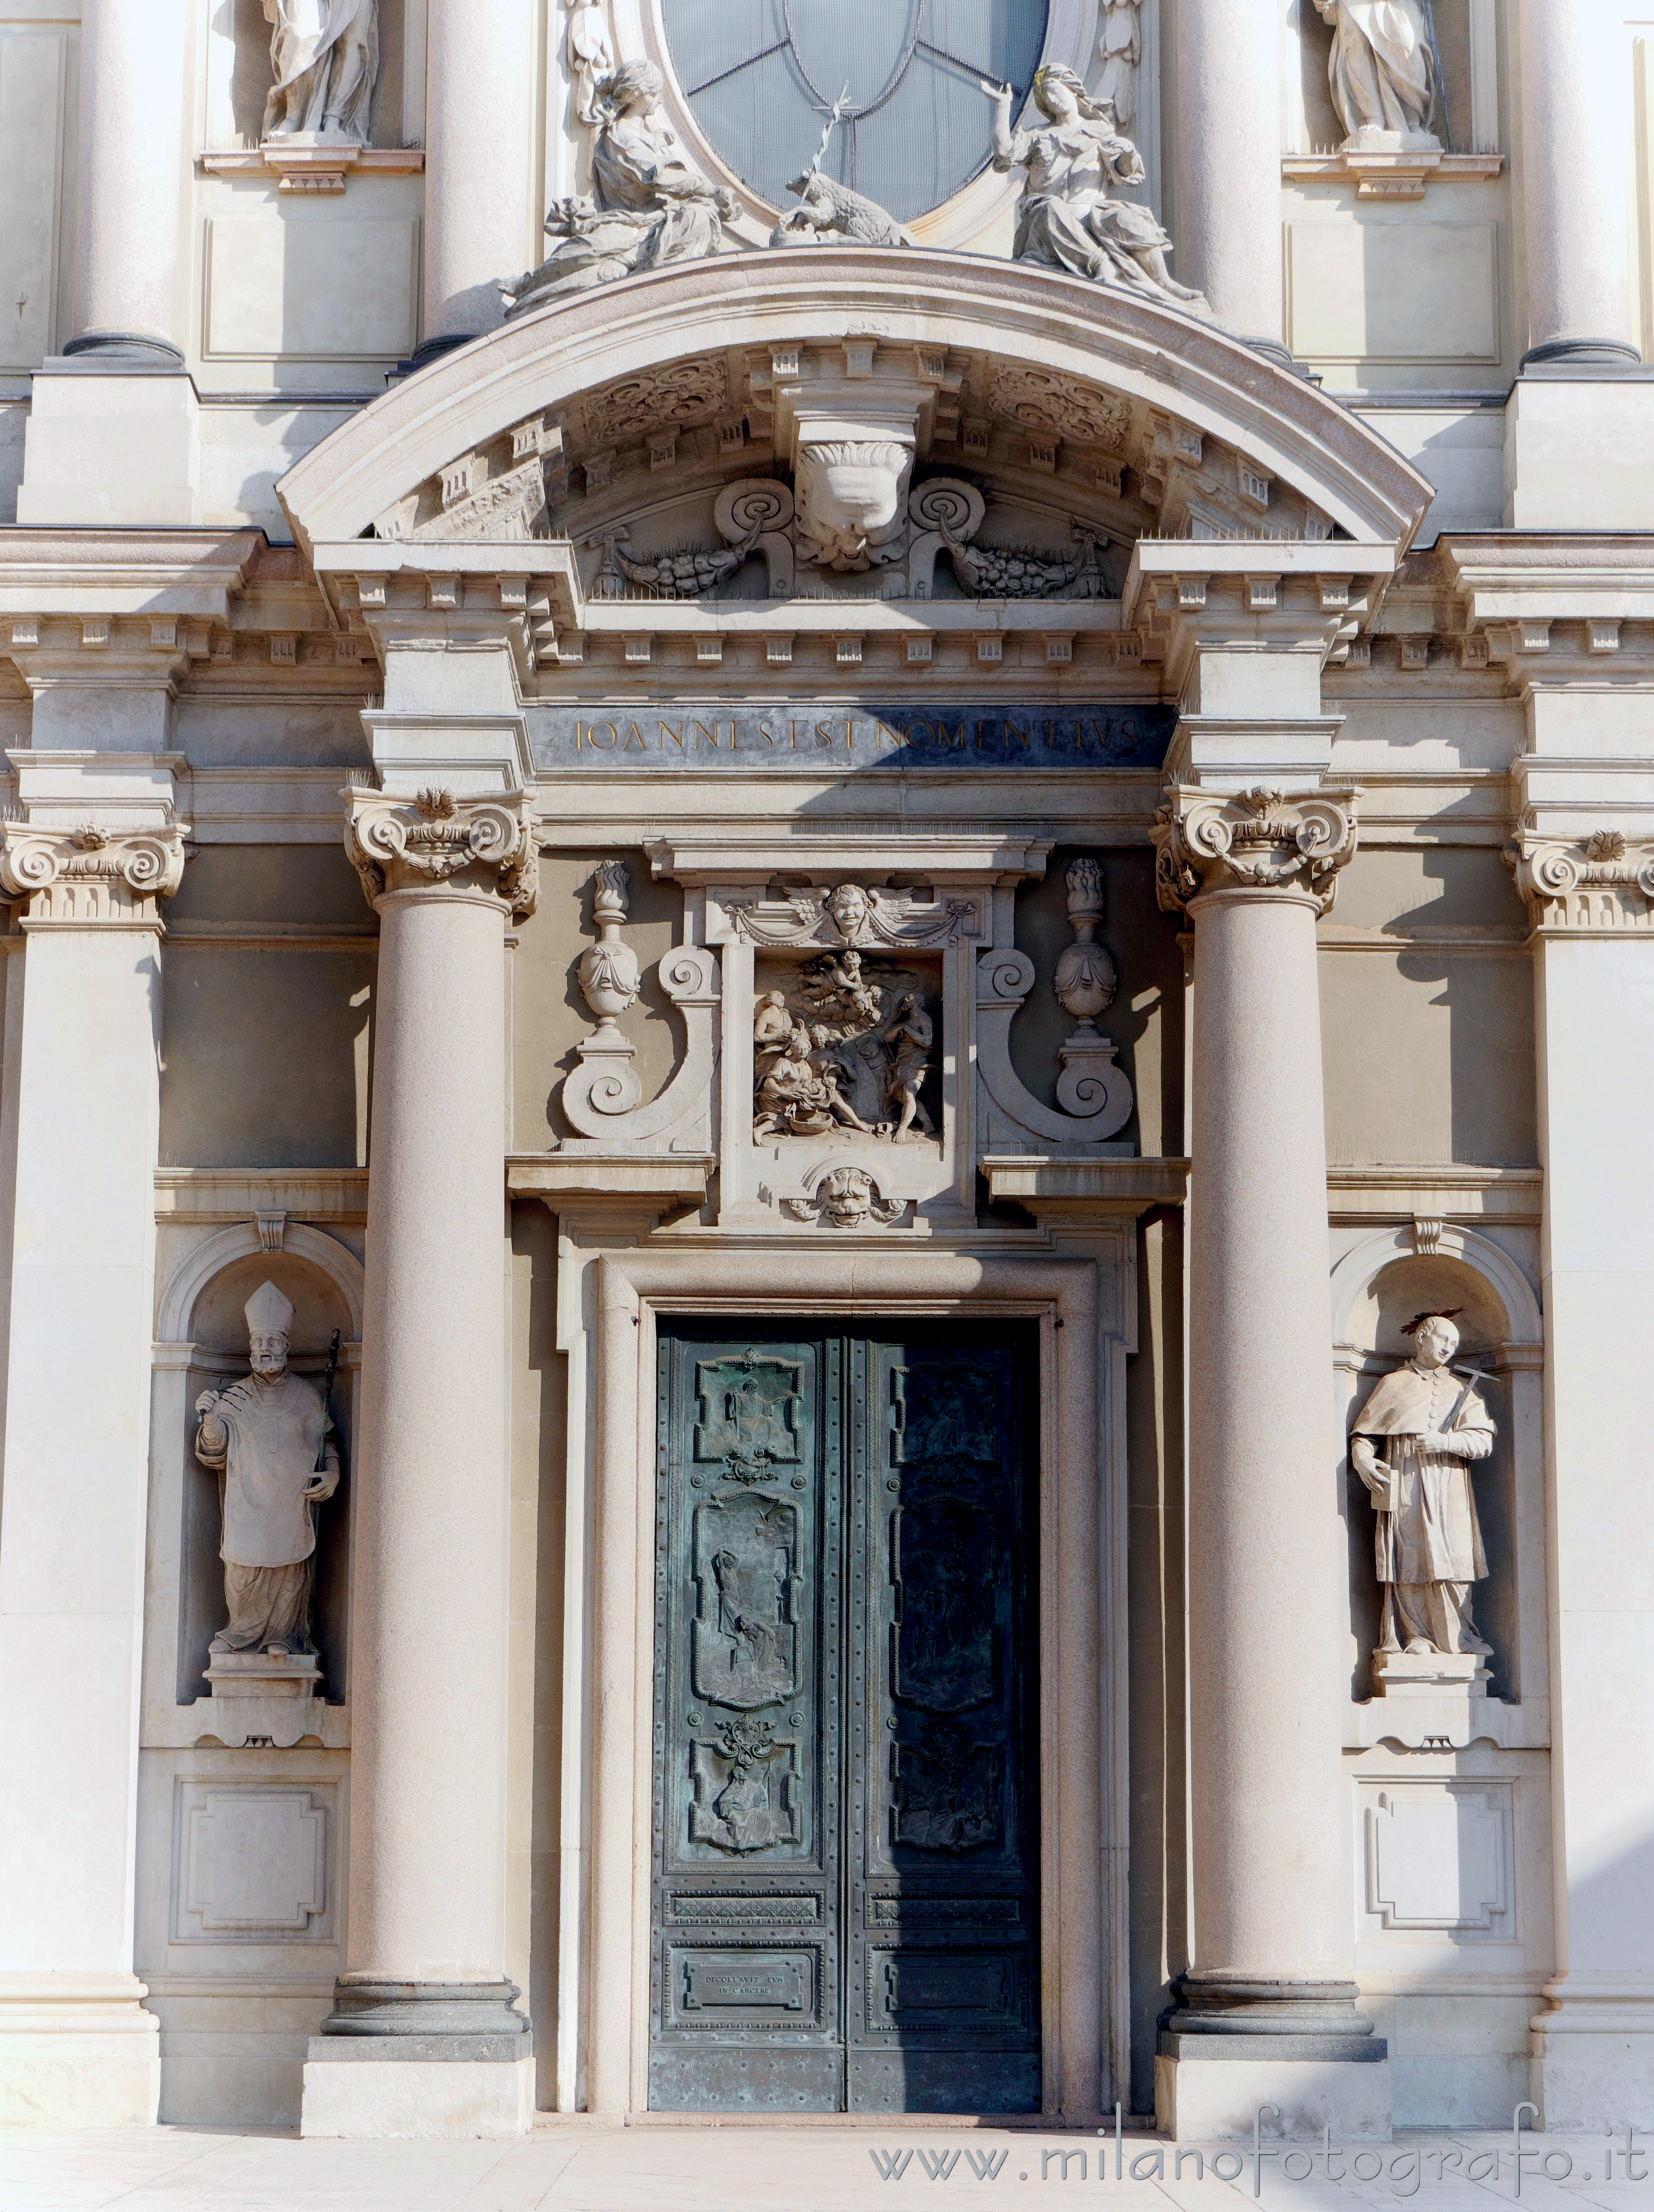 Busto Arsizio (Varese, Italy): Central portal of the Basilica of St. John Baptist - Busto Arsizio (Varese, Italy)